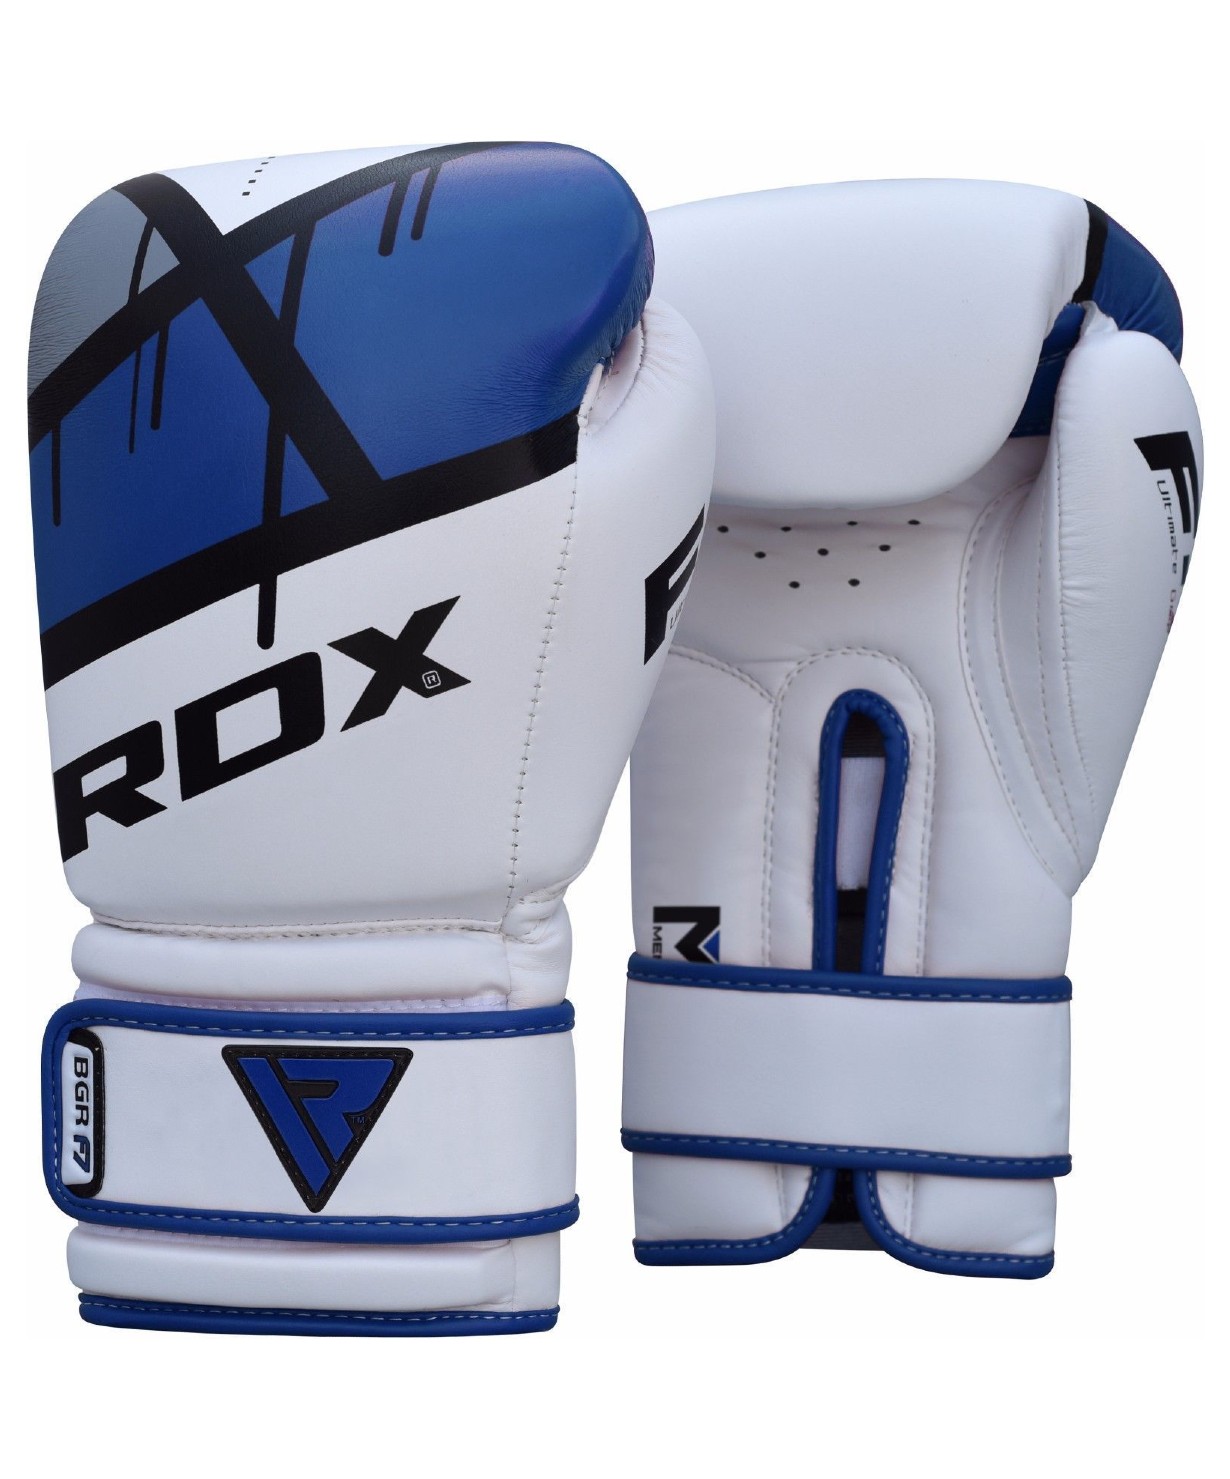 Боксерские перчатки RDX BGR-F7 BLUE BGR-F7U, синие, 12 унций